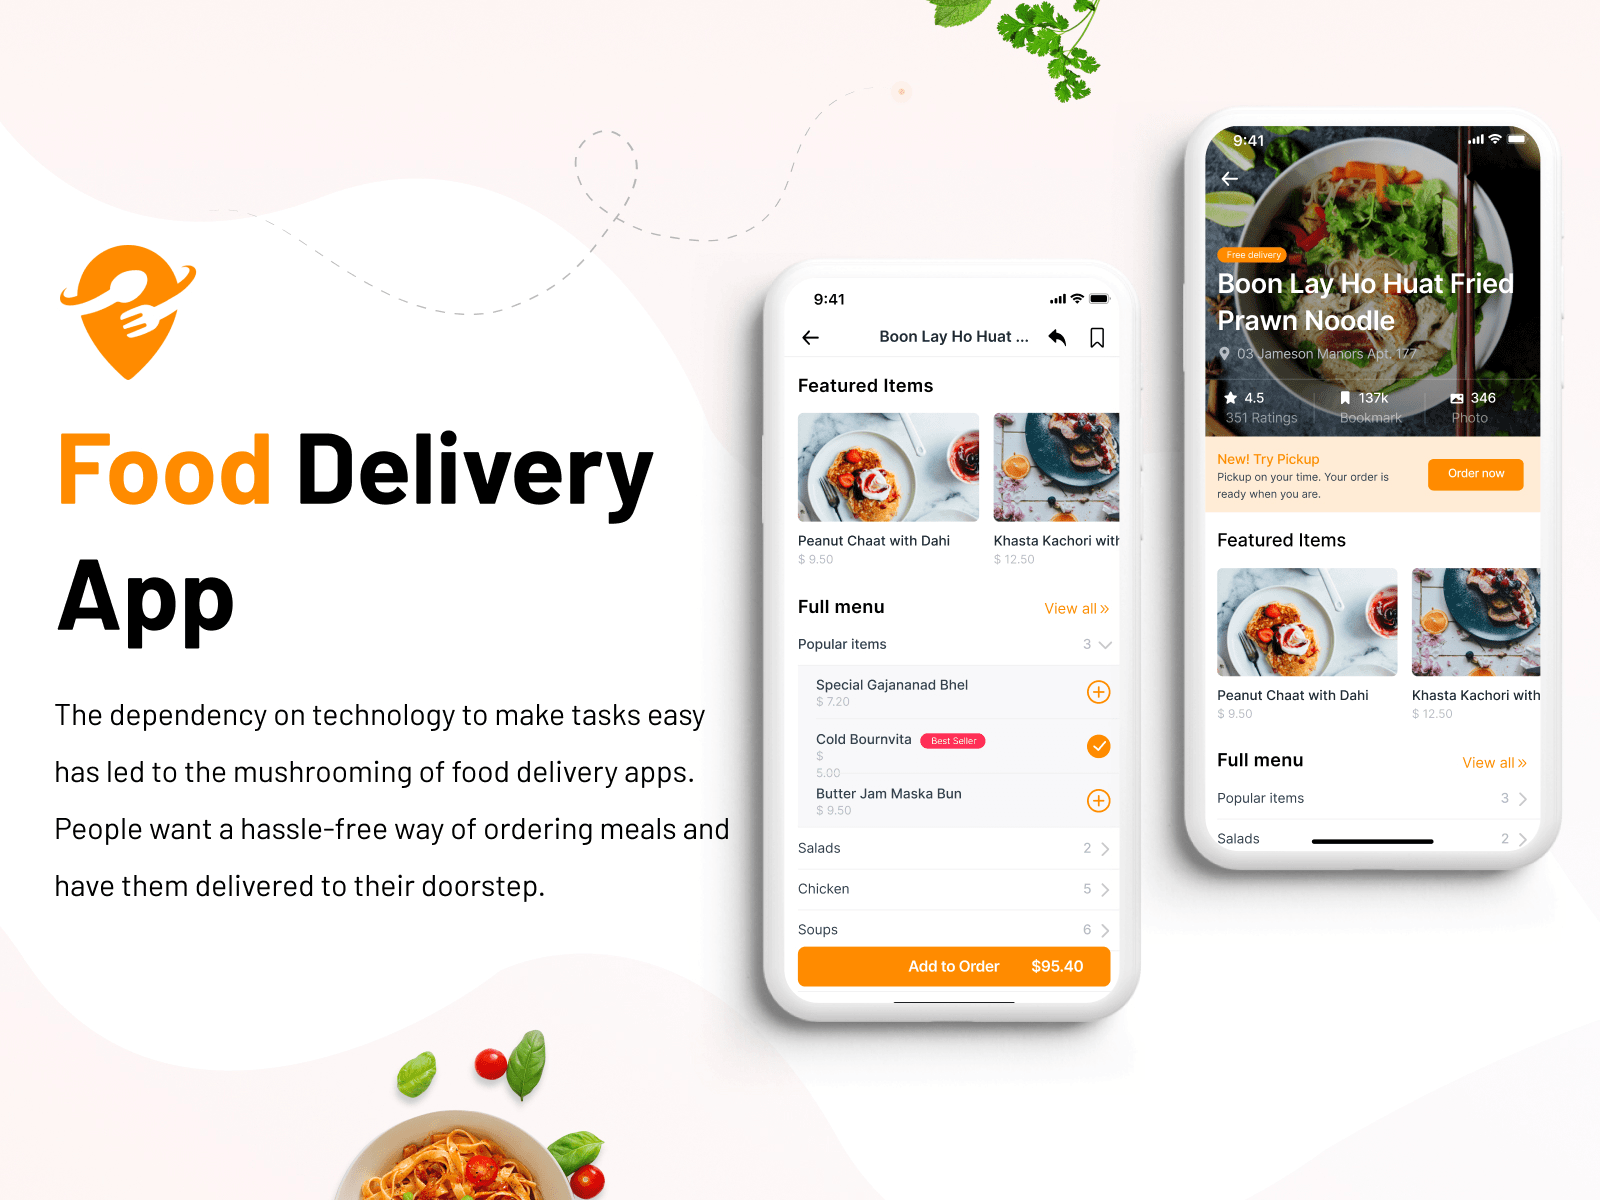 Food Delivery App - Mobile App